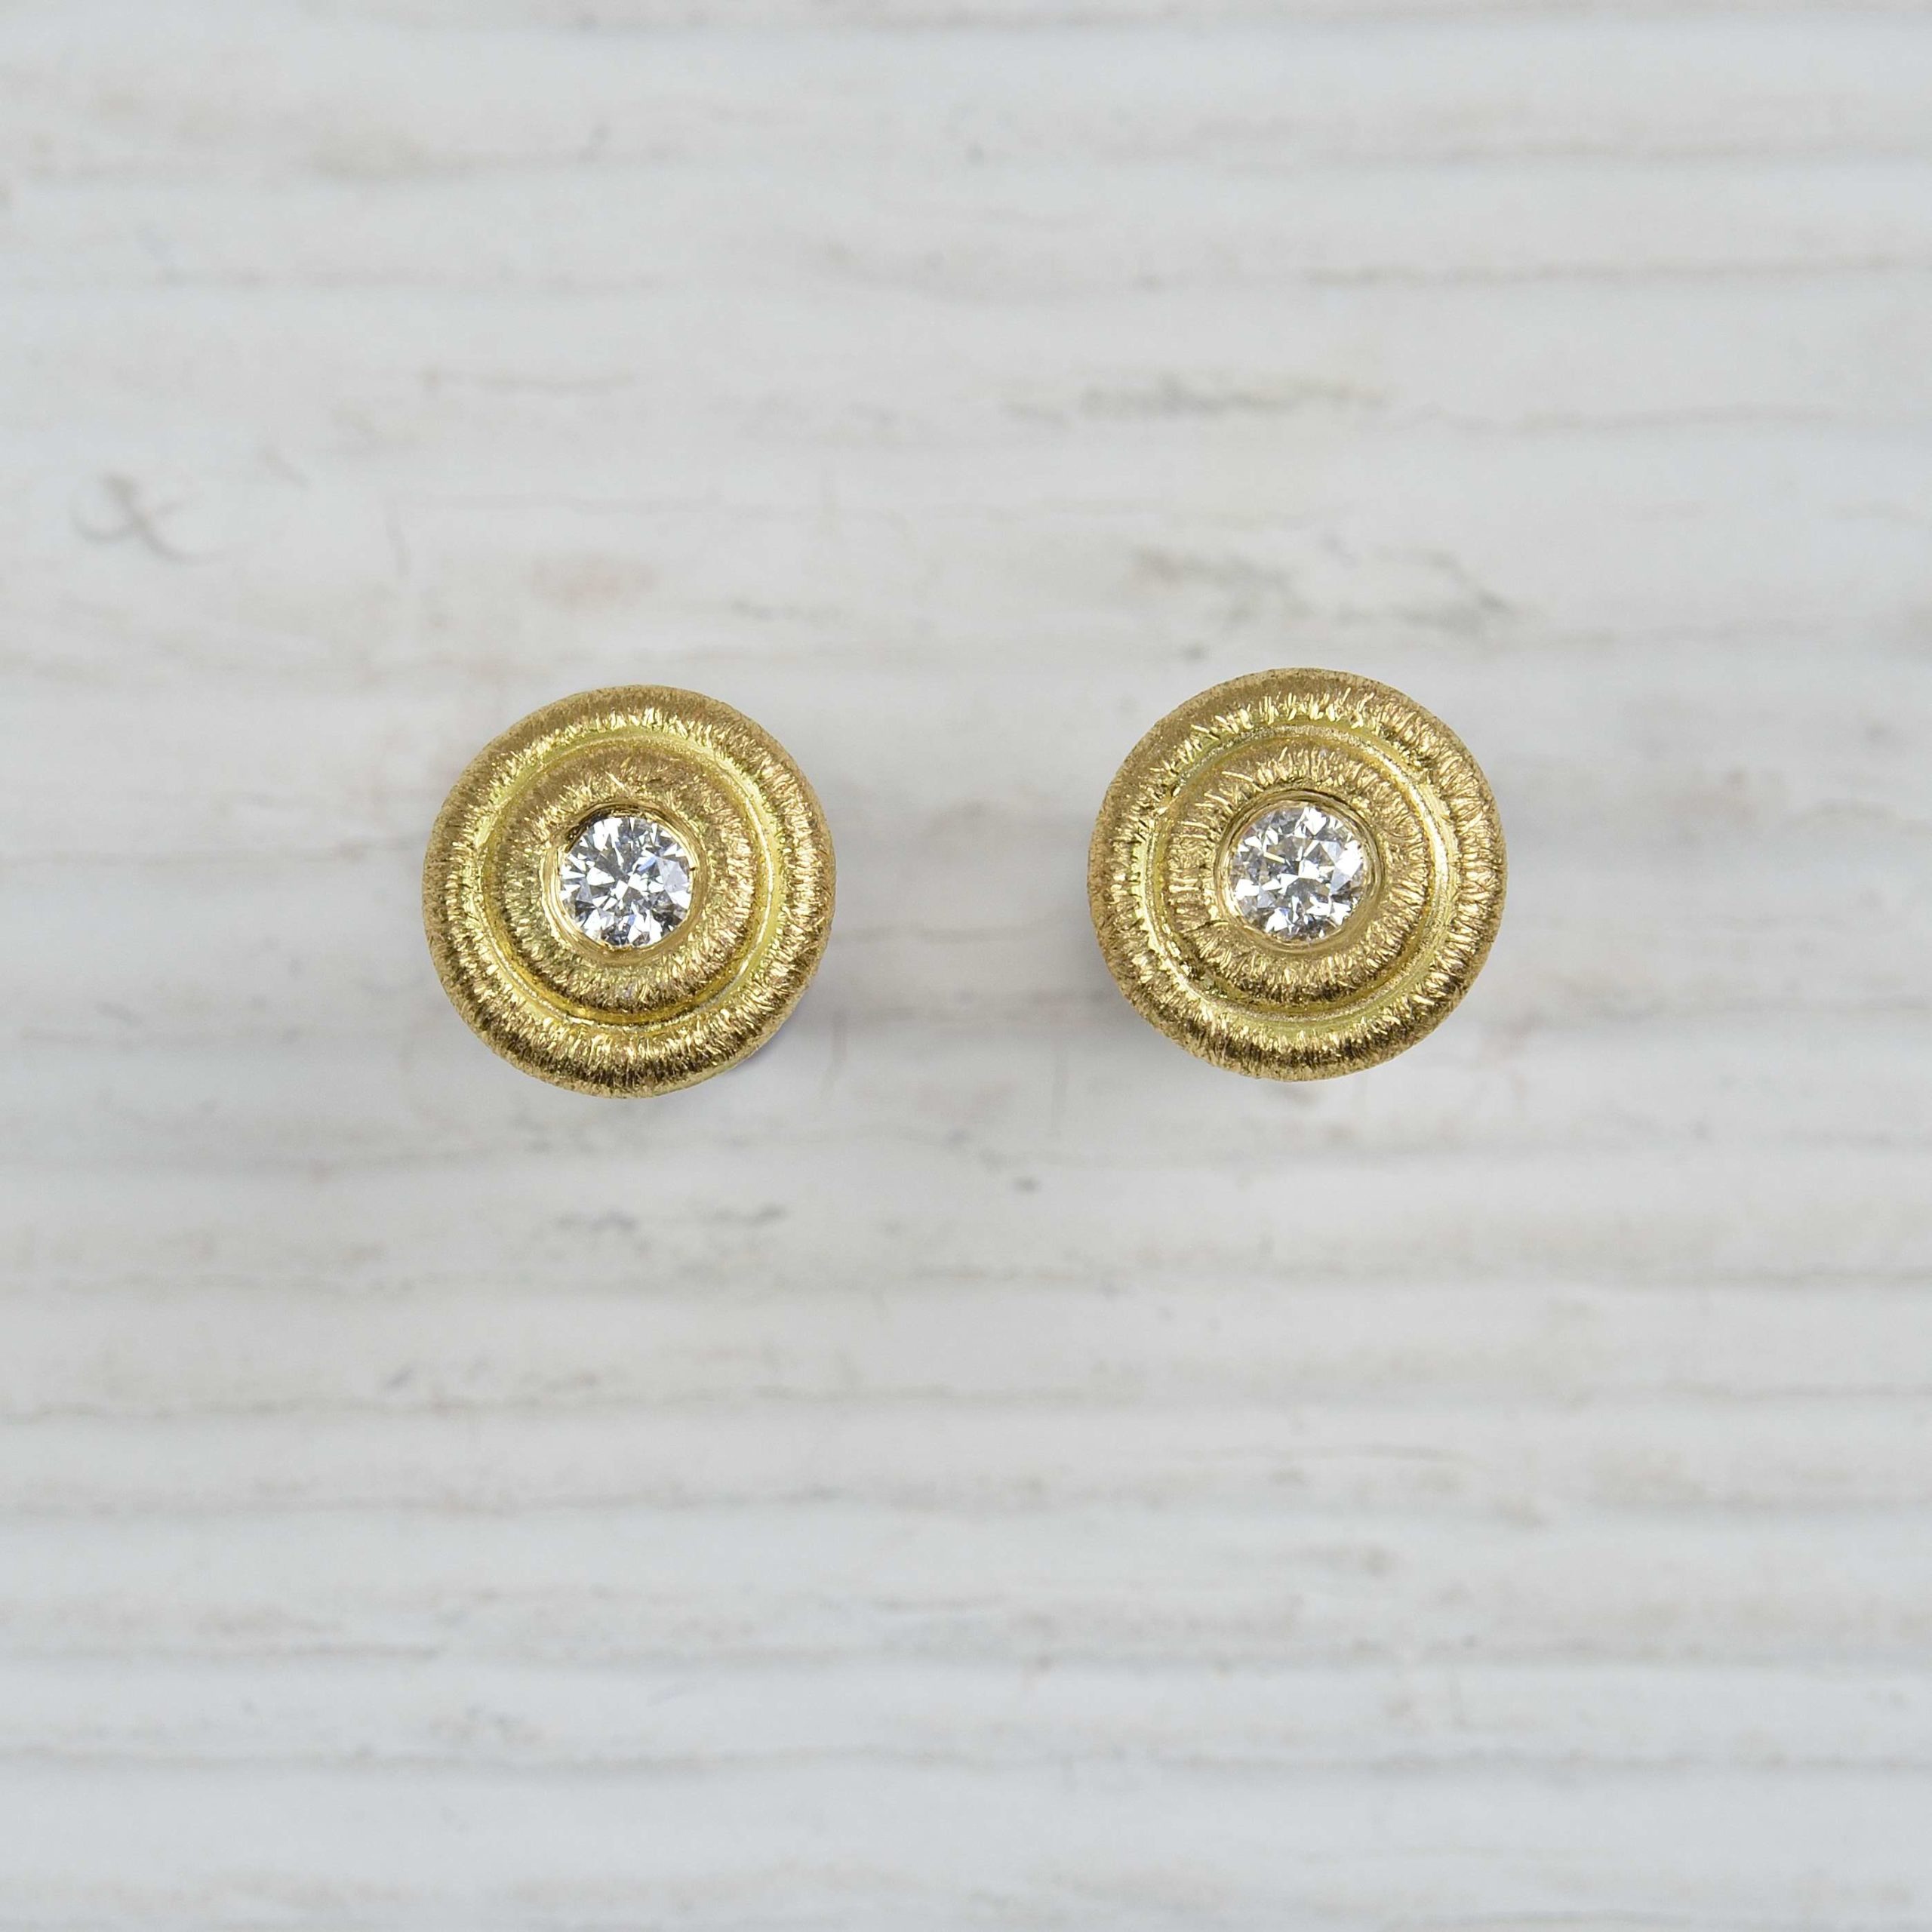 18ct gold diamond stud earrings - mh goldsmith